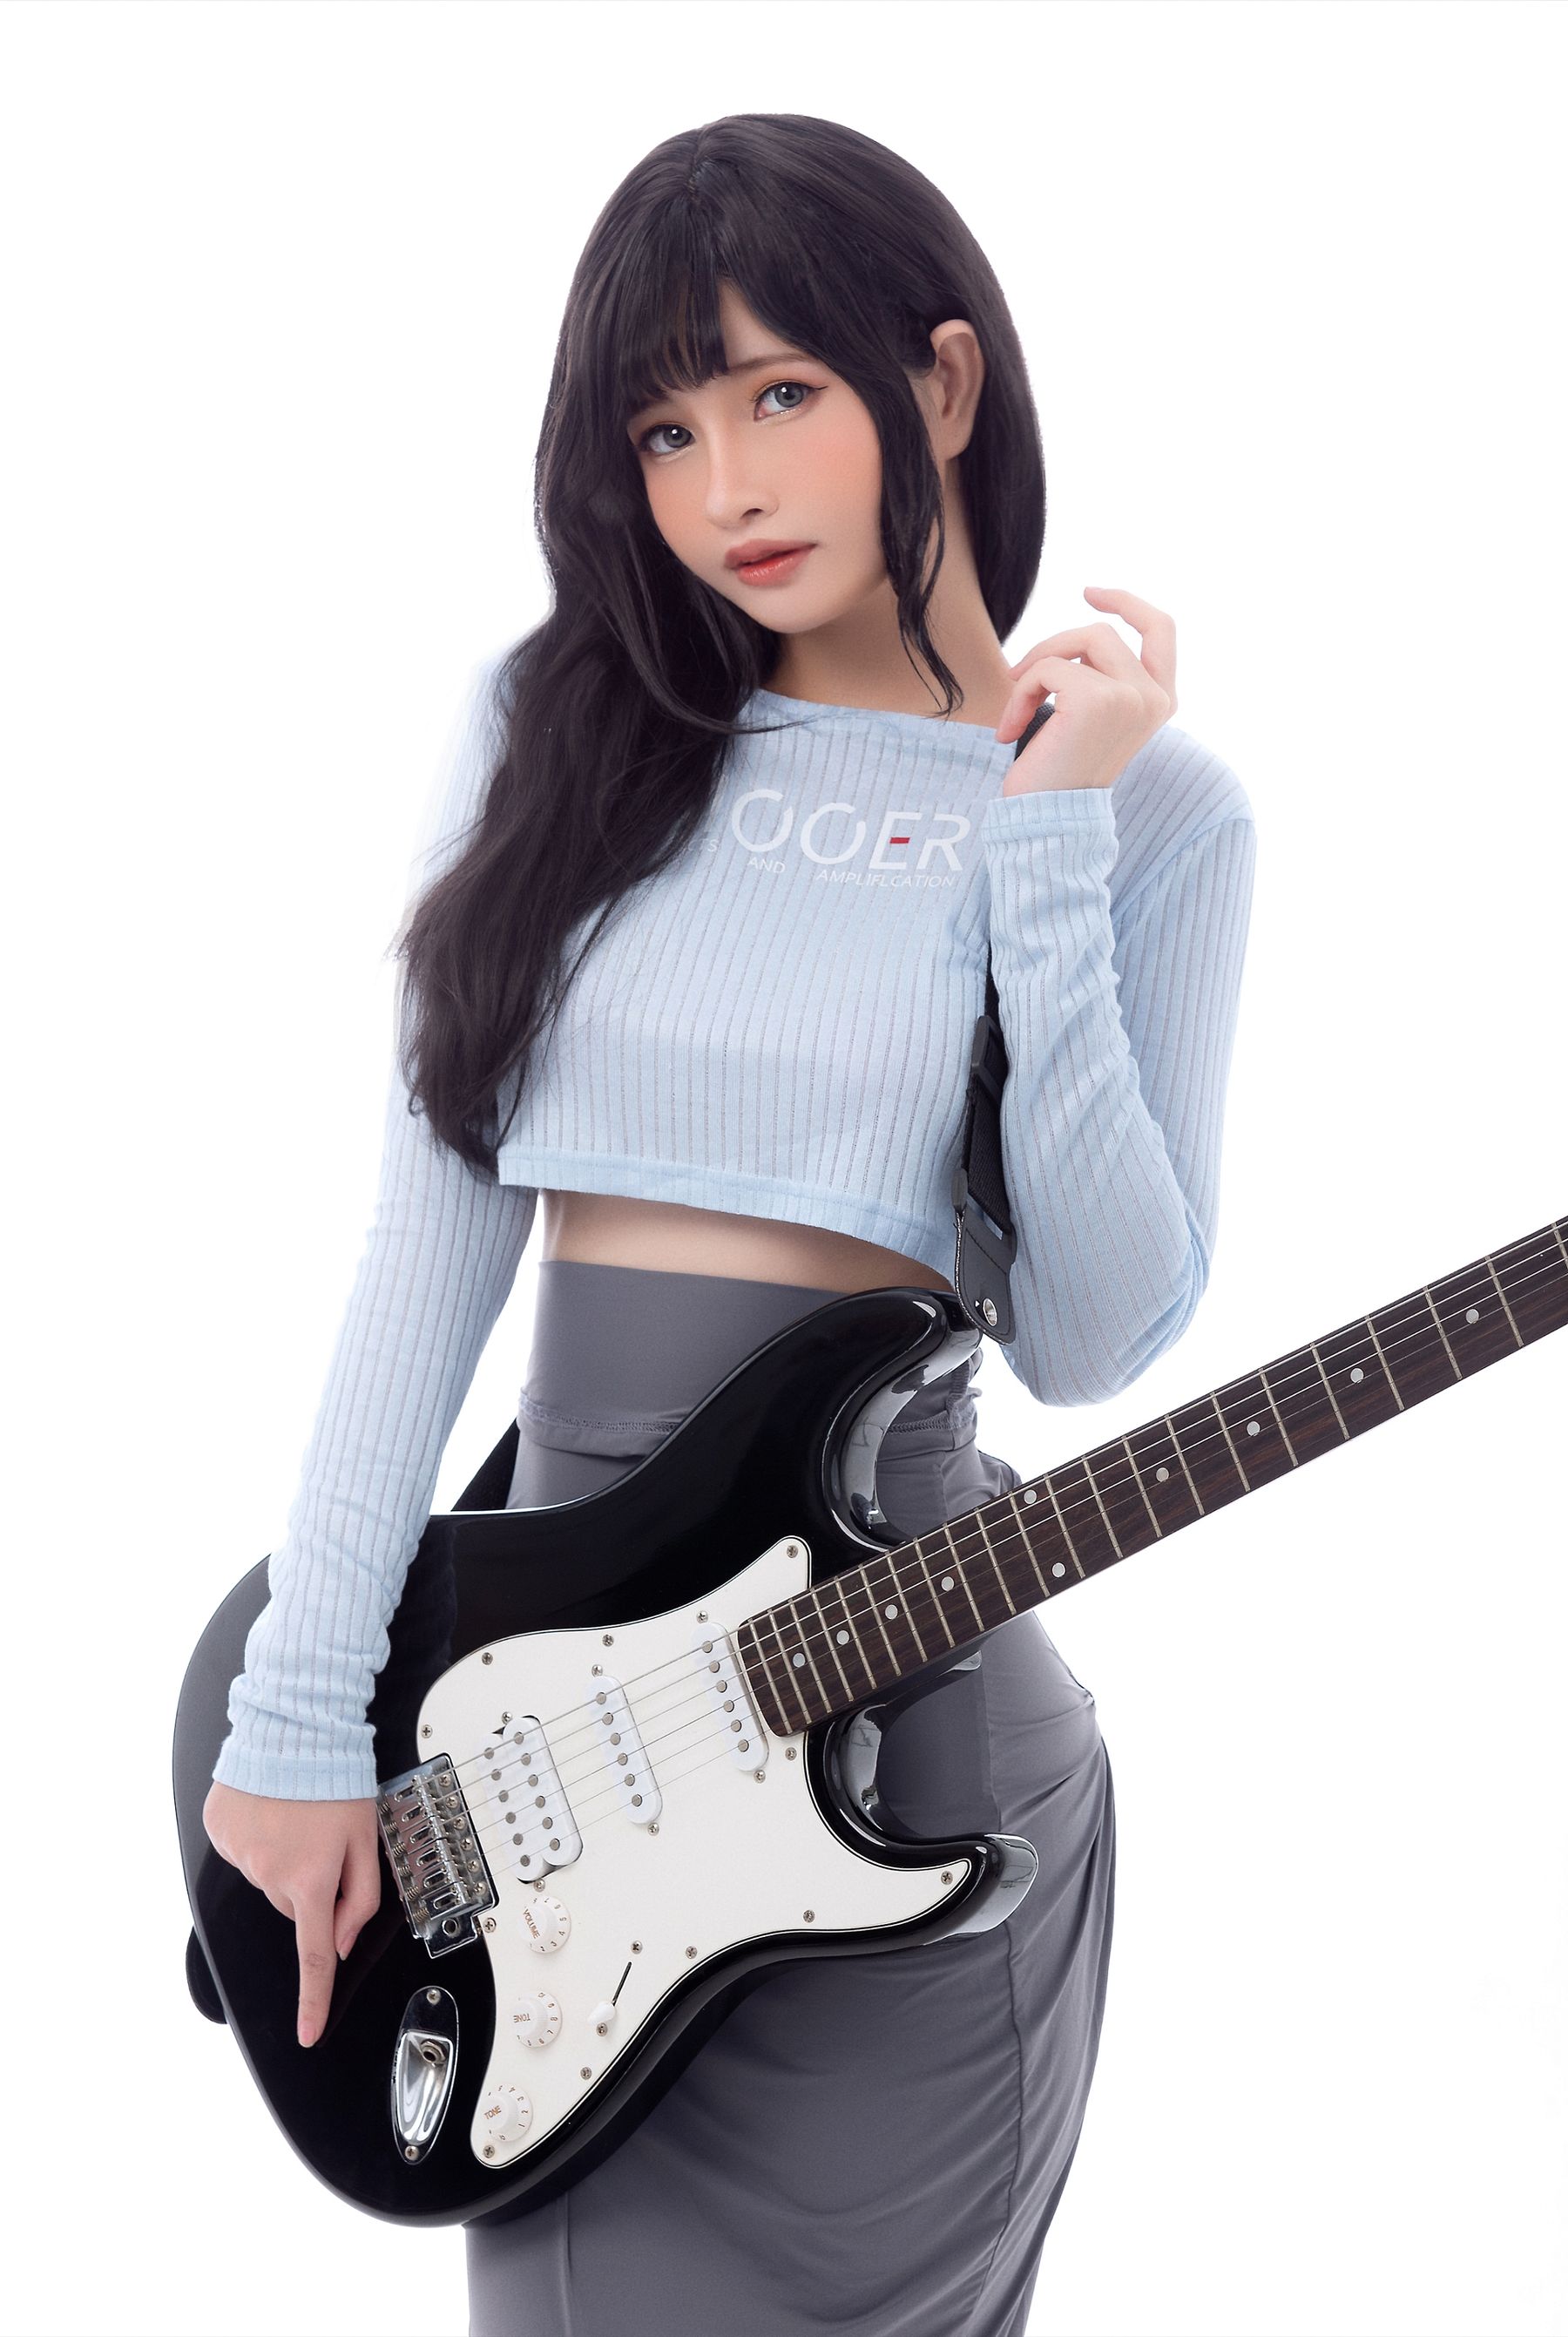 [福利COS] Azami福利 - Guitar Sister1